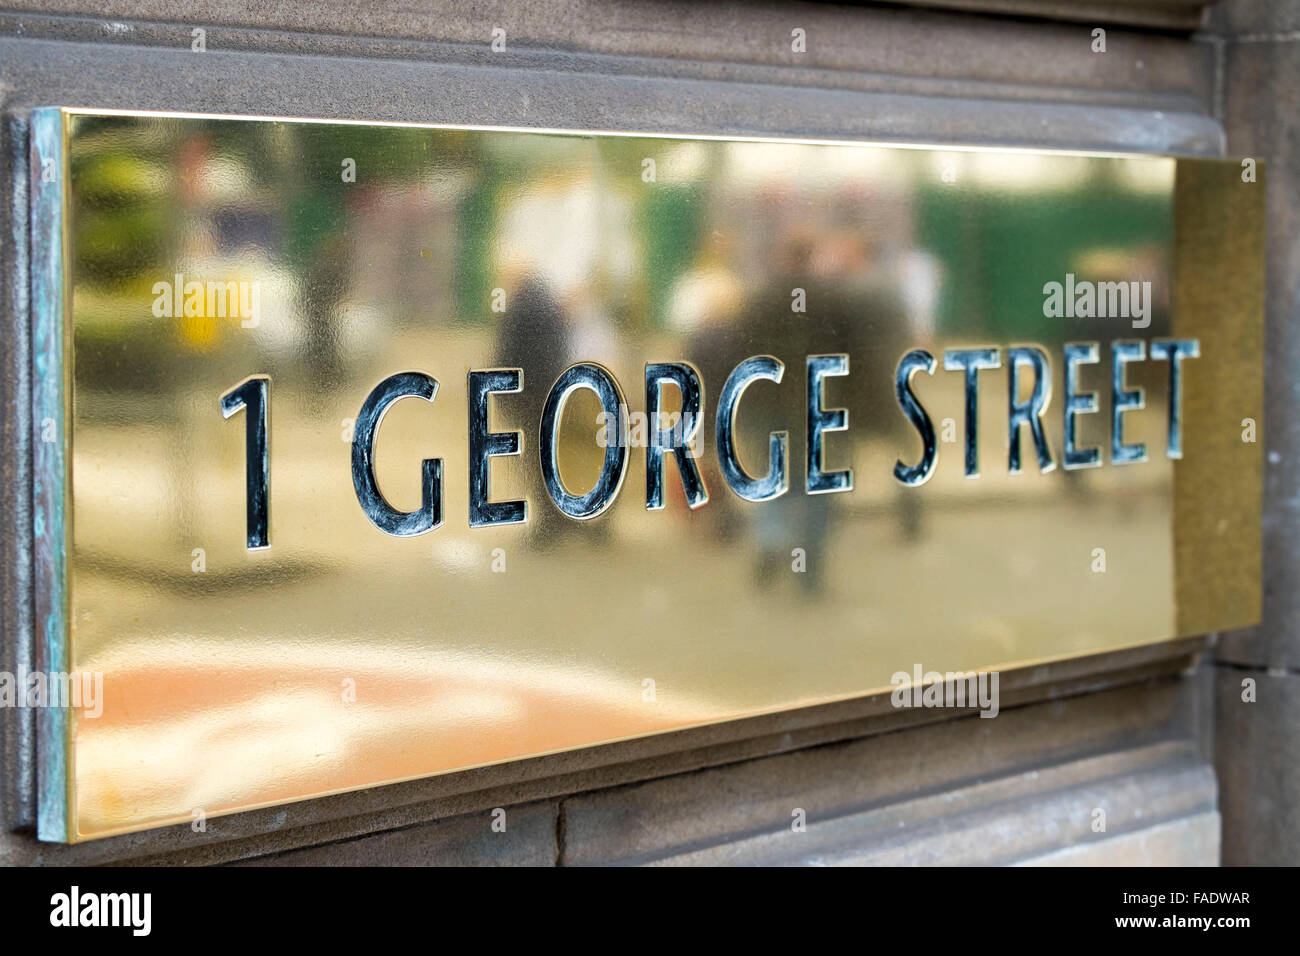 1 George Street Edinburgh Scotland Stock Photo